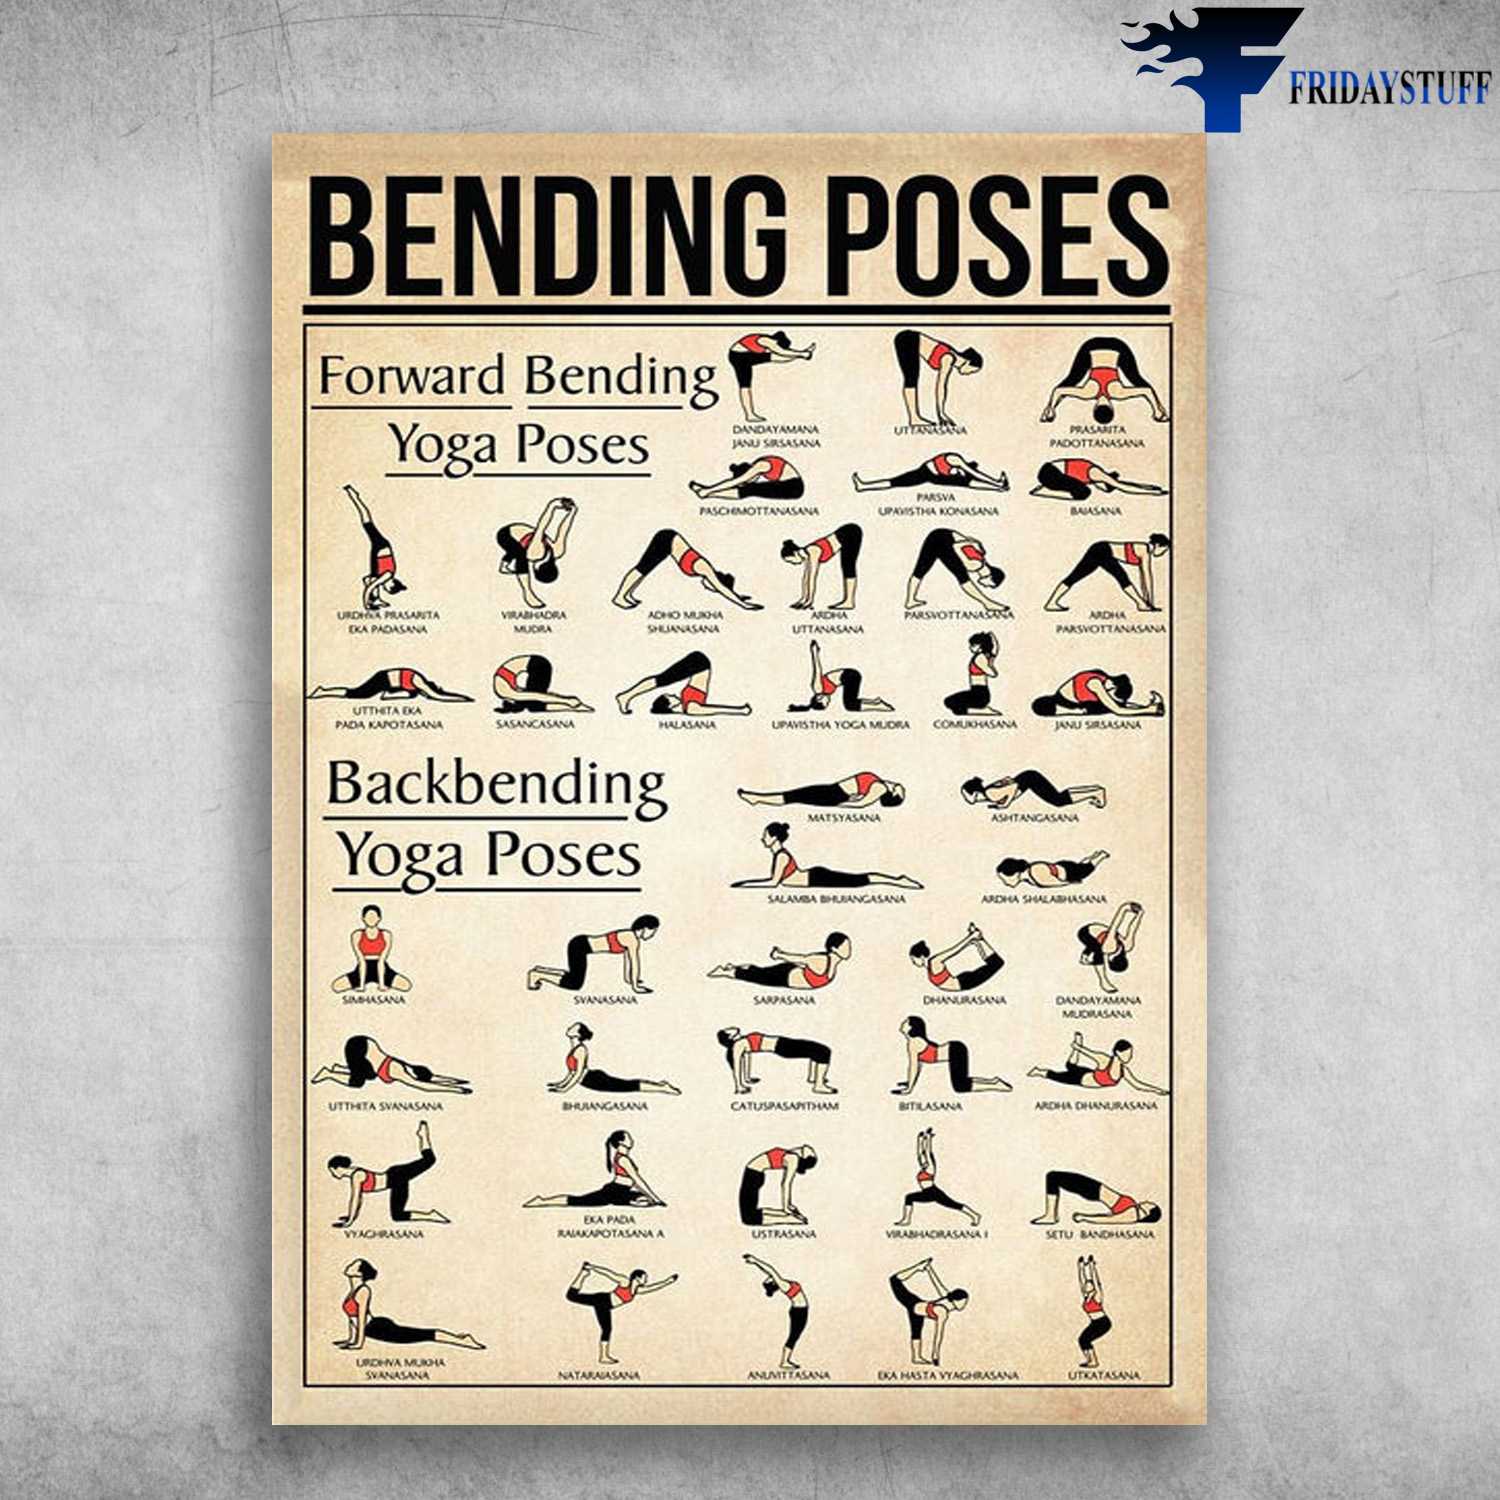 Bending Poses - Forward Bending Yoda Poses, Backbending Yoga Poses, Yoga Lover